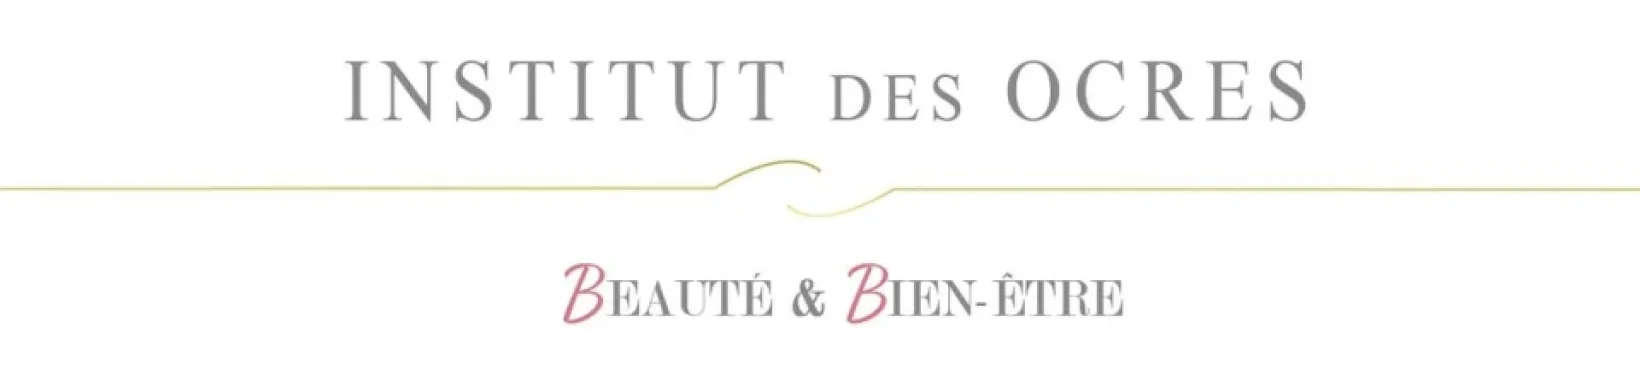 Institut des Ocres - Sandrine Thonnatte, Provence-Alpes-Côte d'Azur - 